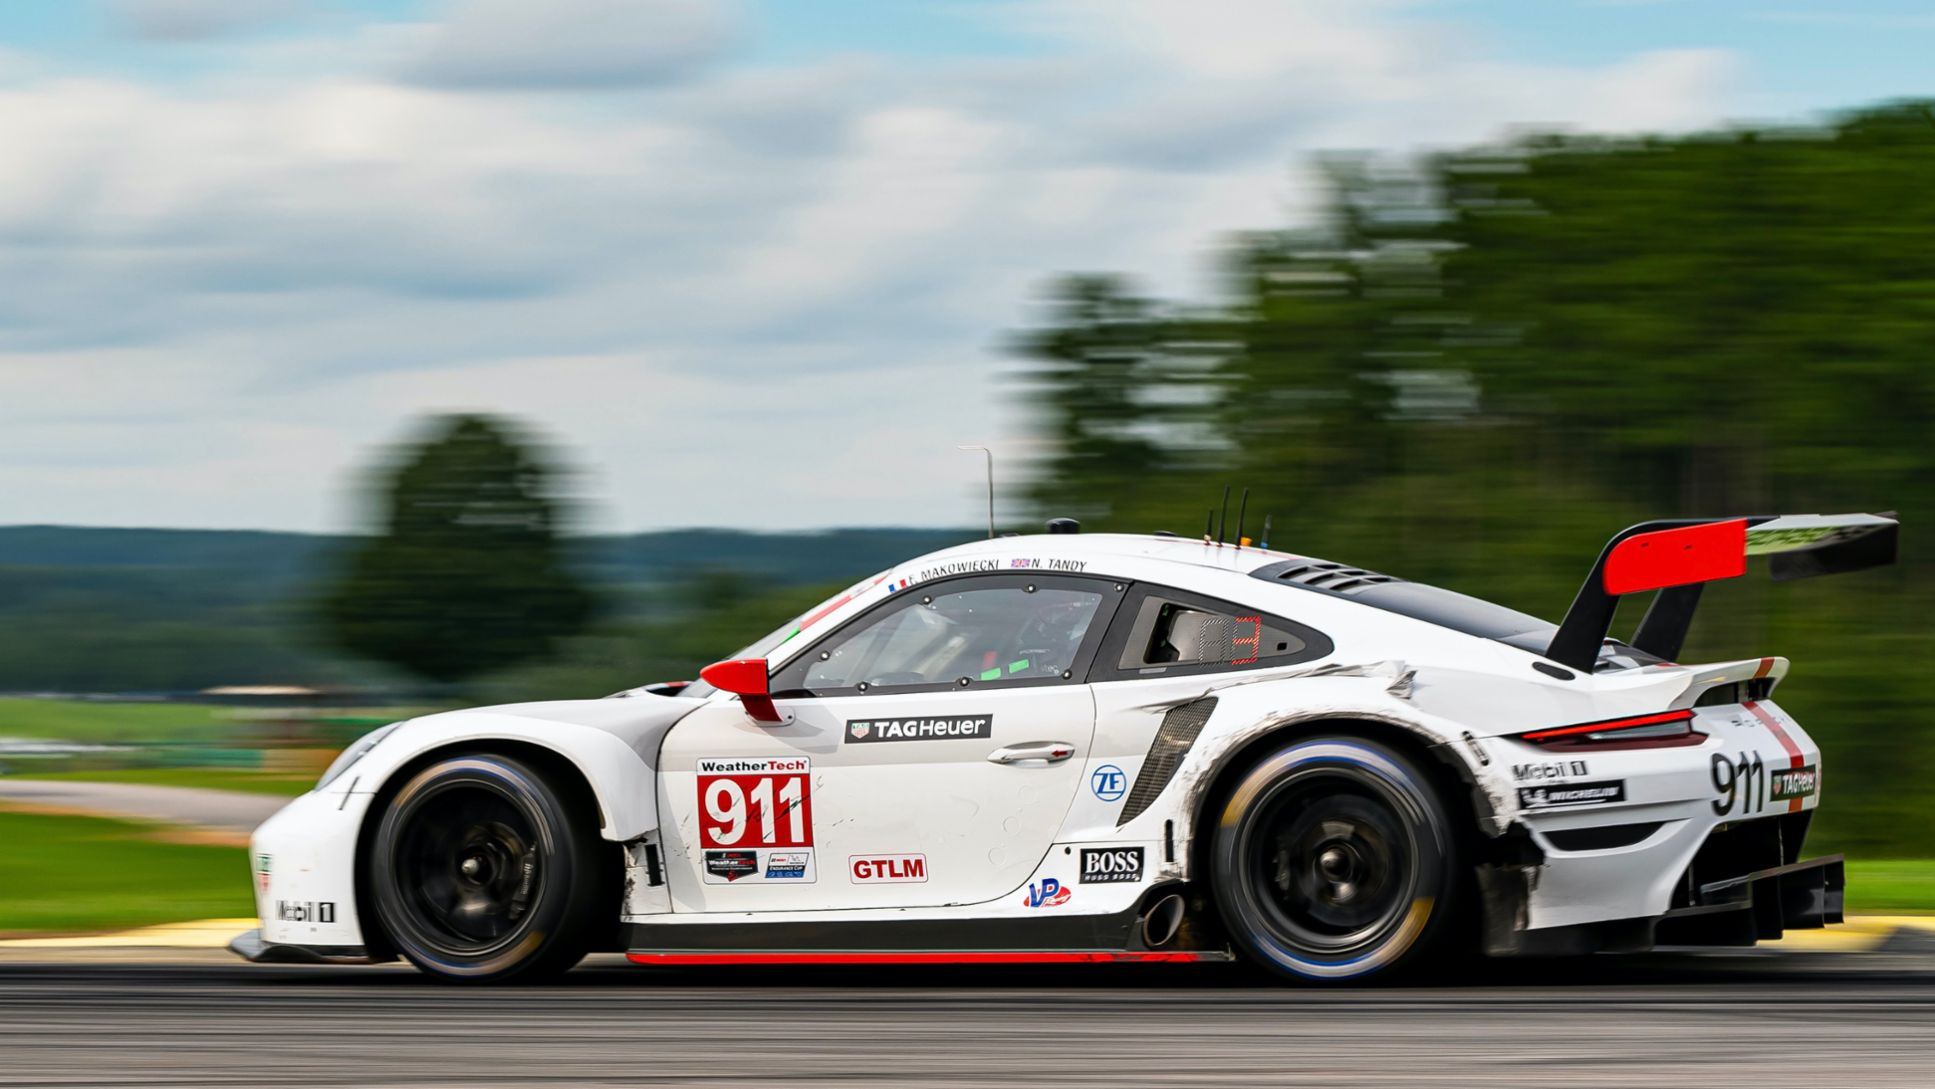 911 RSR, IMSA WeatherTech SportsCar Championship, Lauf 5, Alton, USA, Rennen, 2020, Porsche AG